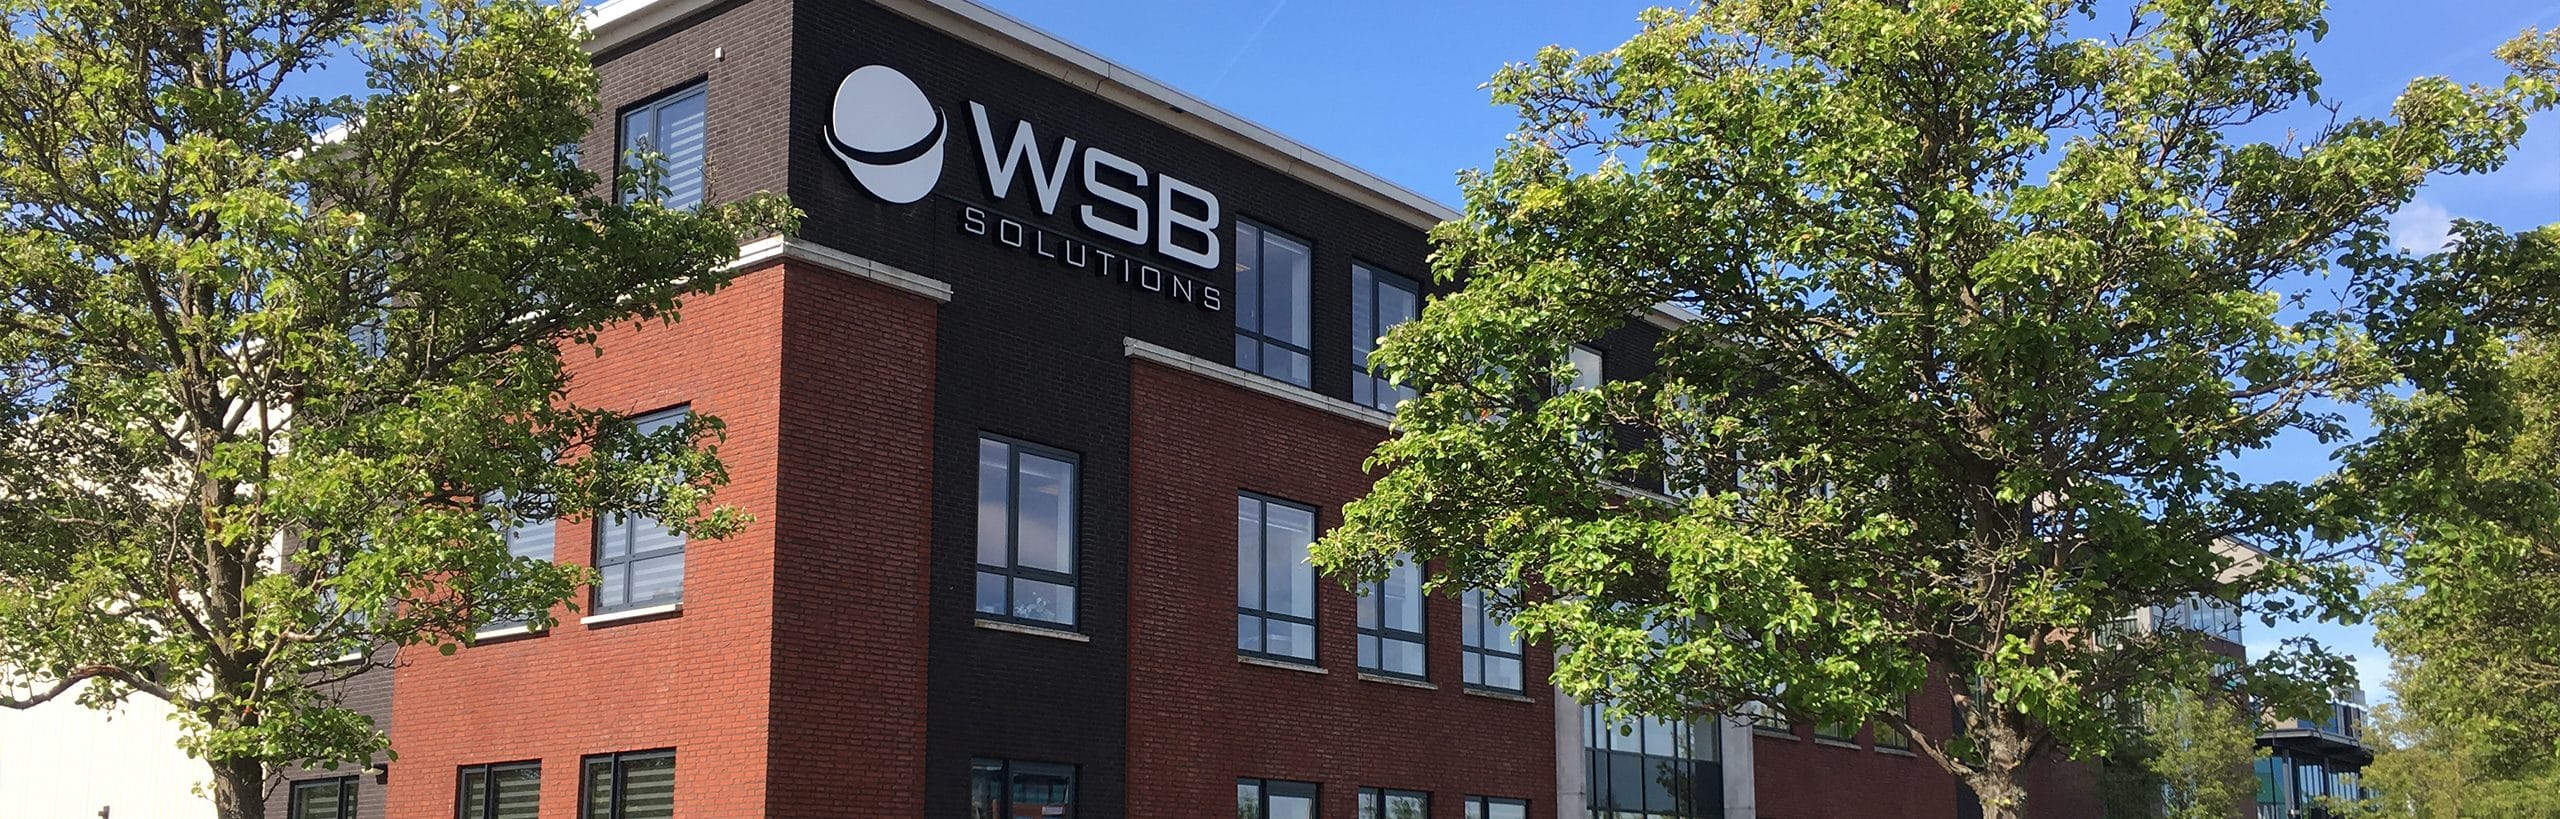 Pand kantoor WSB Solutions Hardinxveld Giessendam